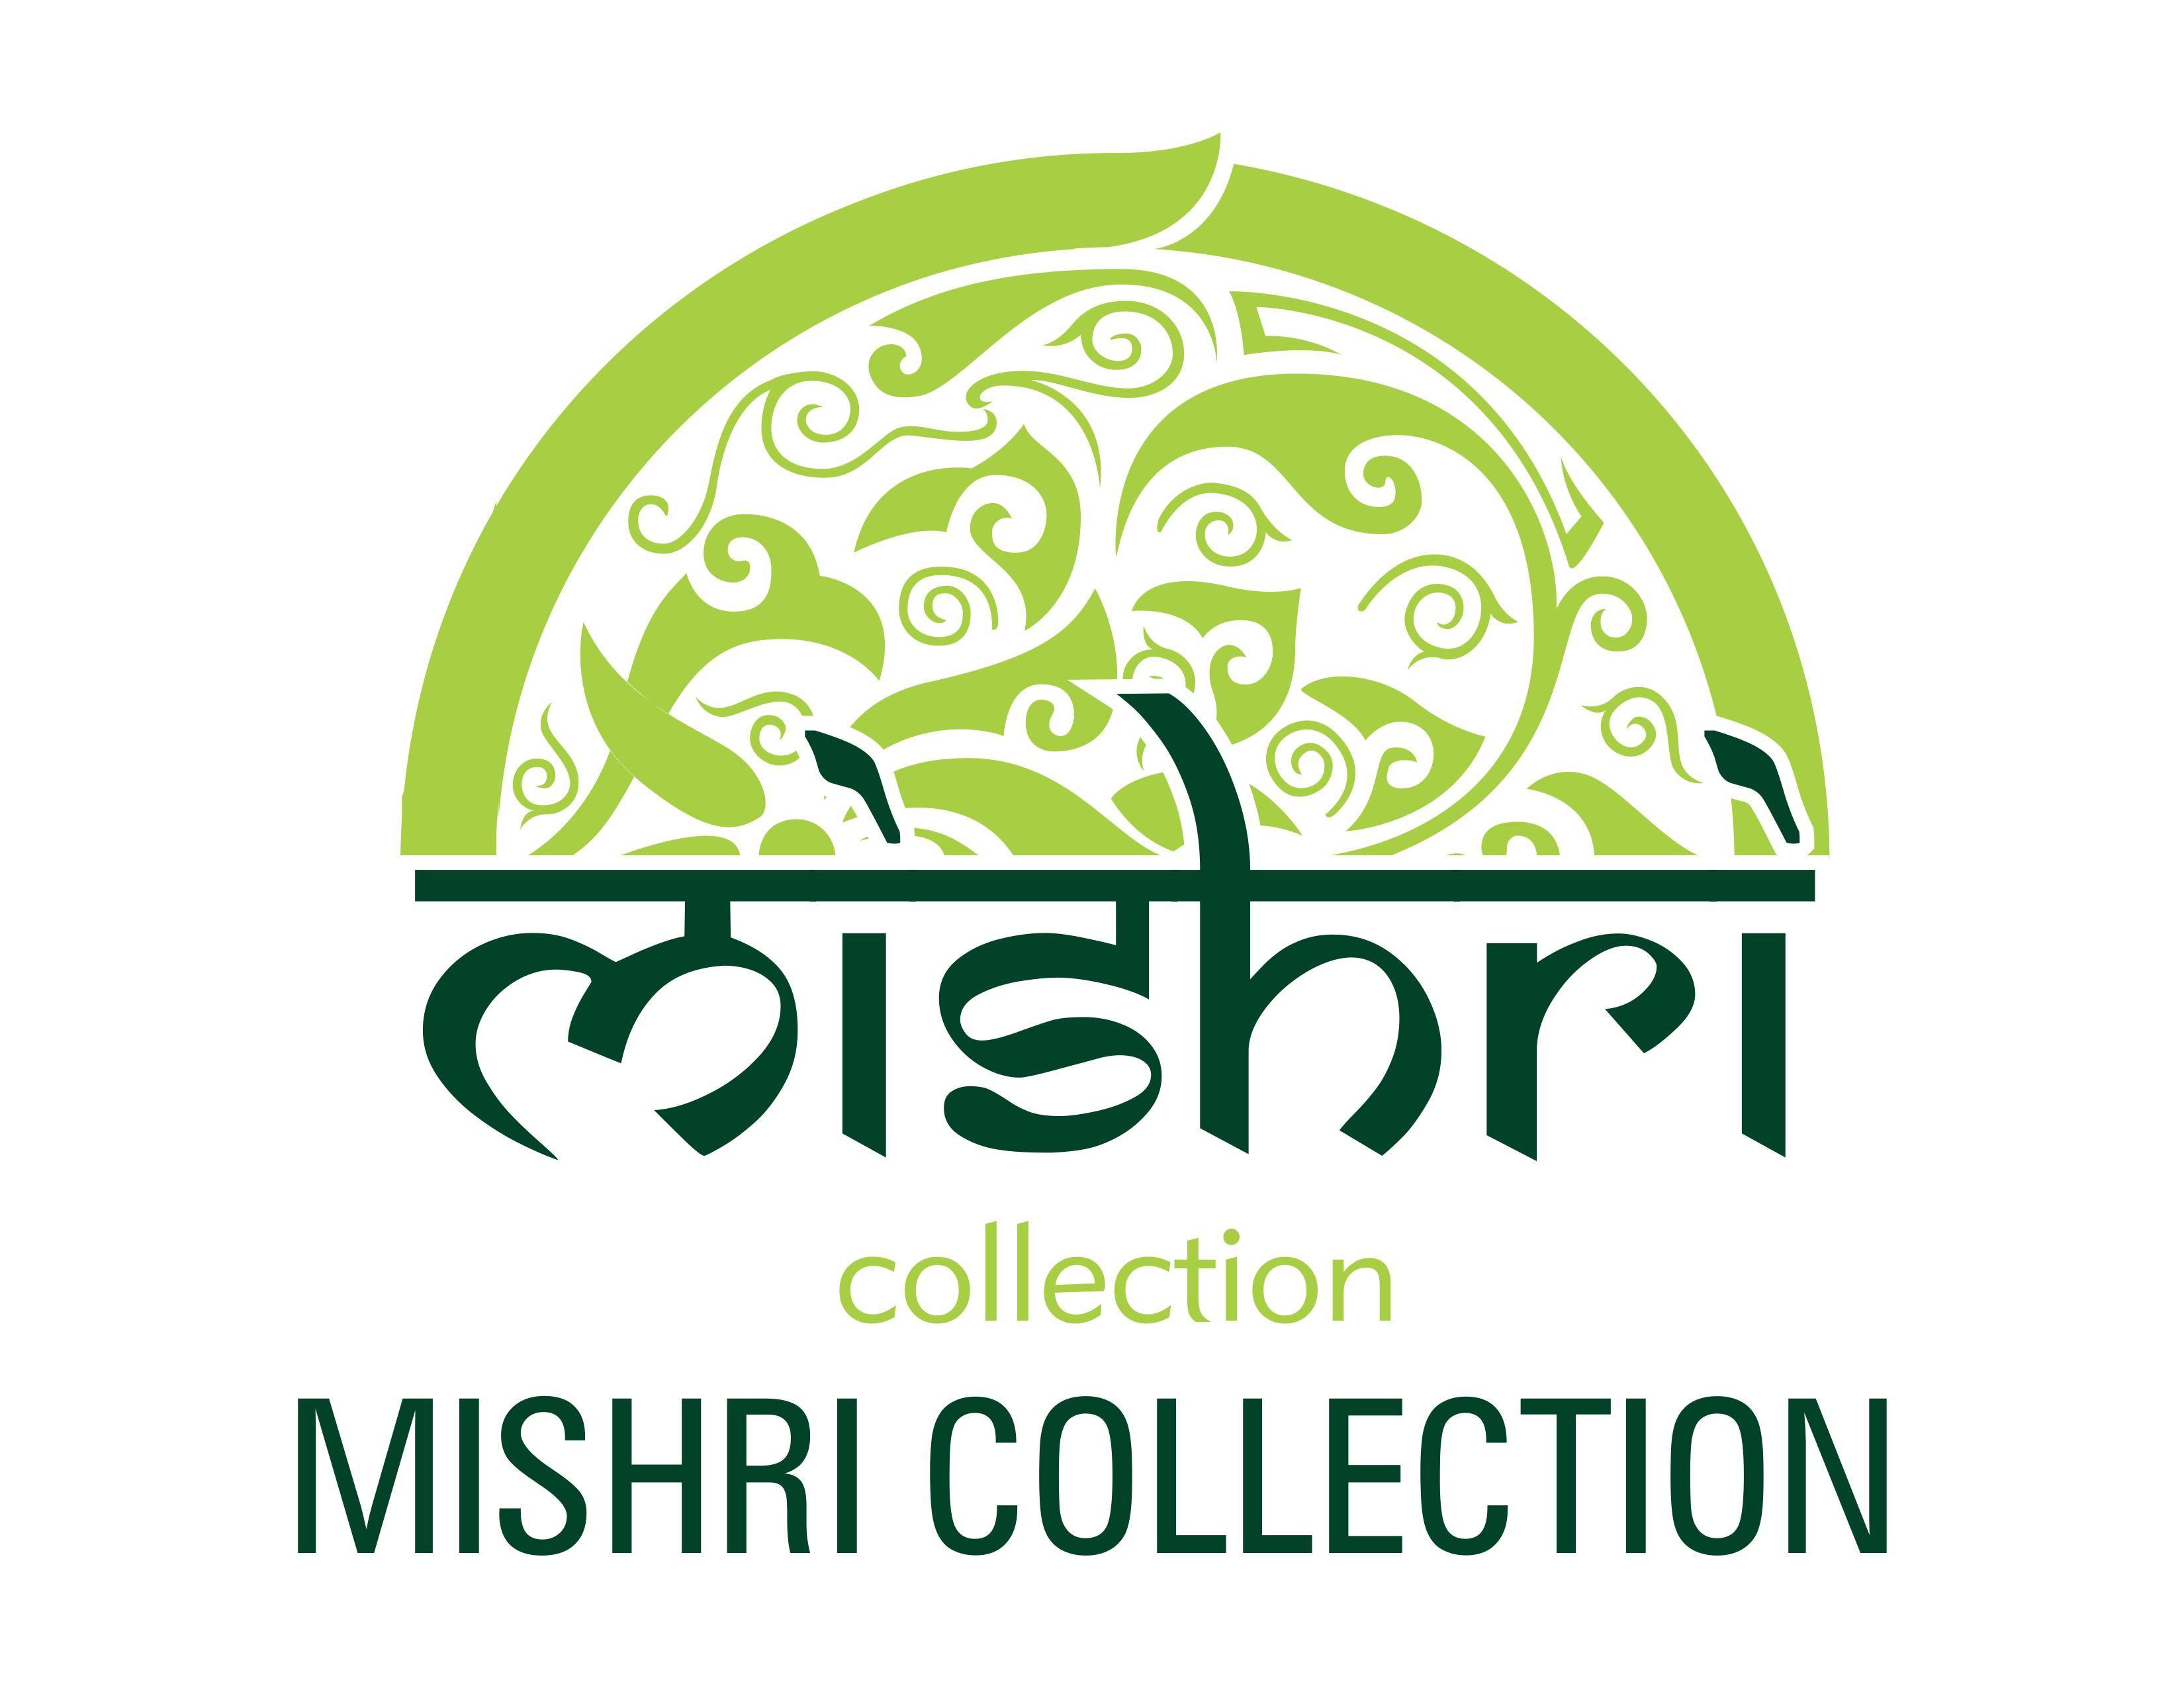 MISHRI COLLECTION